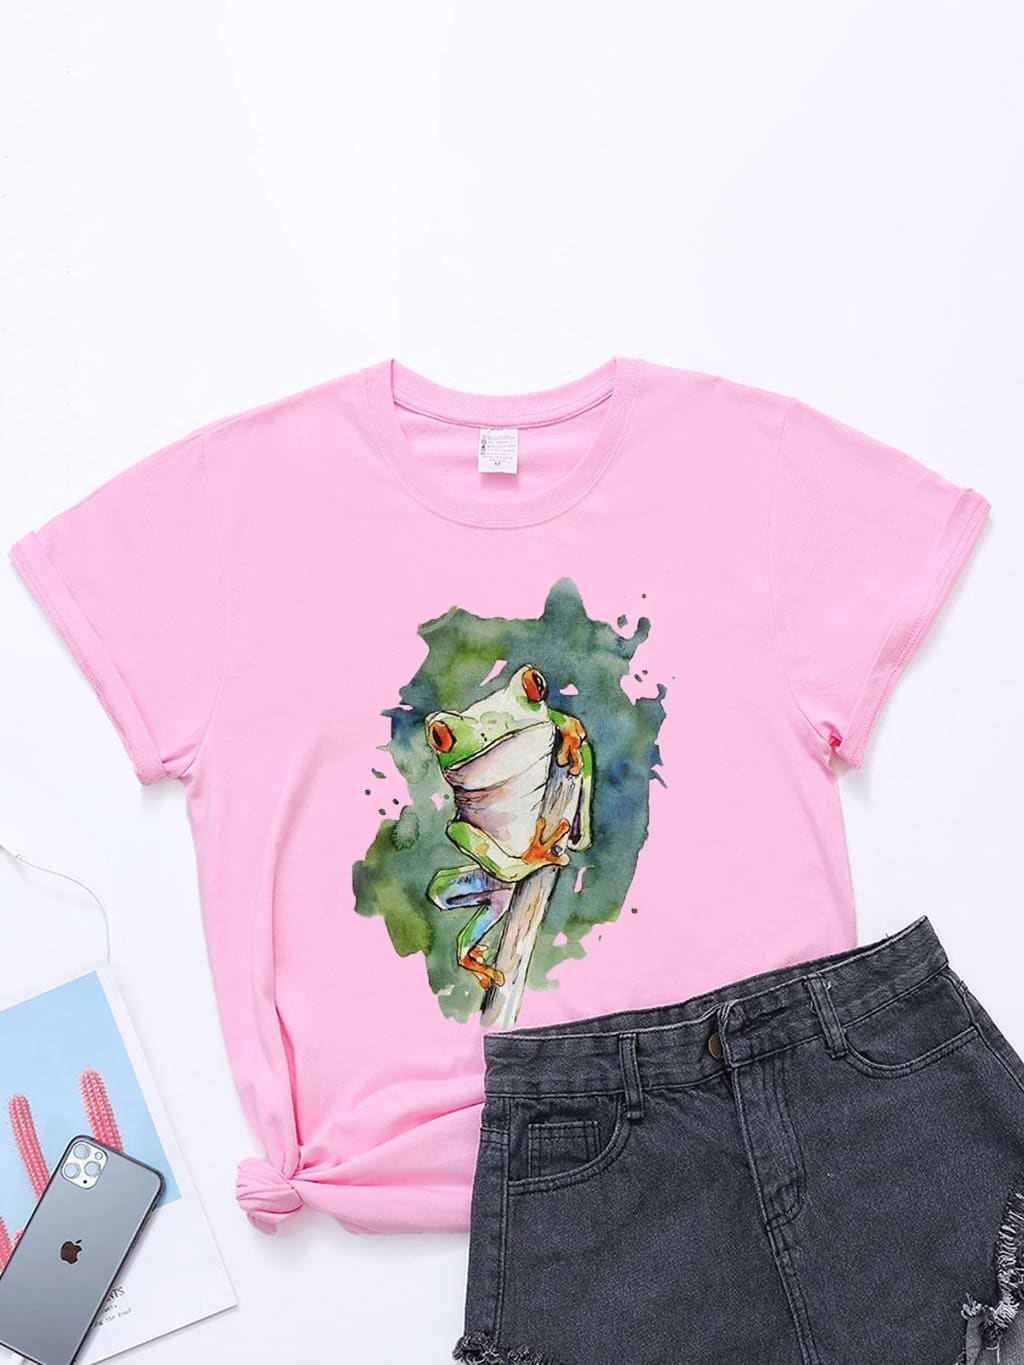 lovevop Latest Style Casual Stylish Women T-Shirts